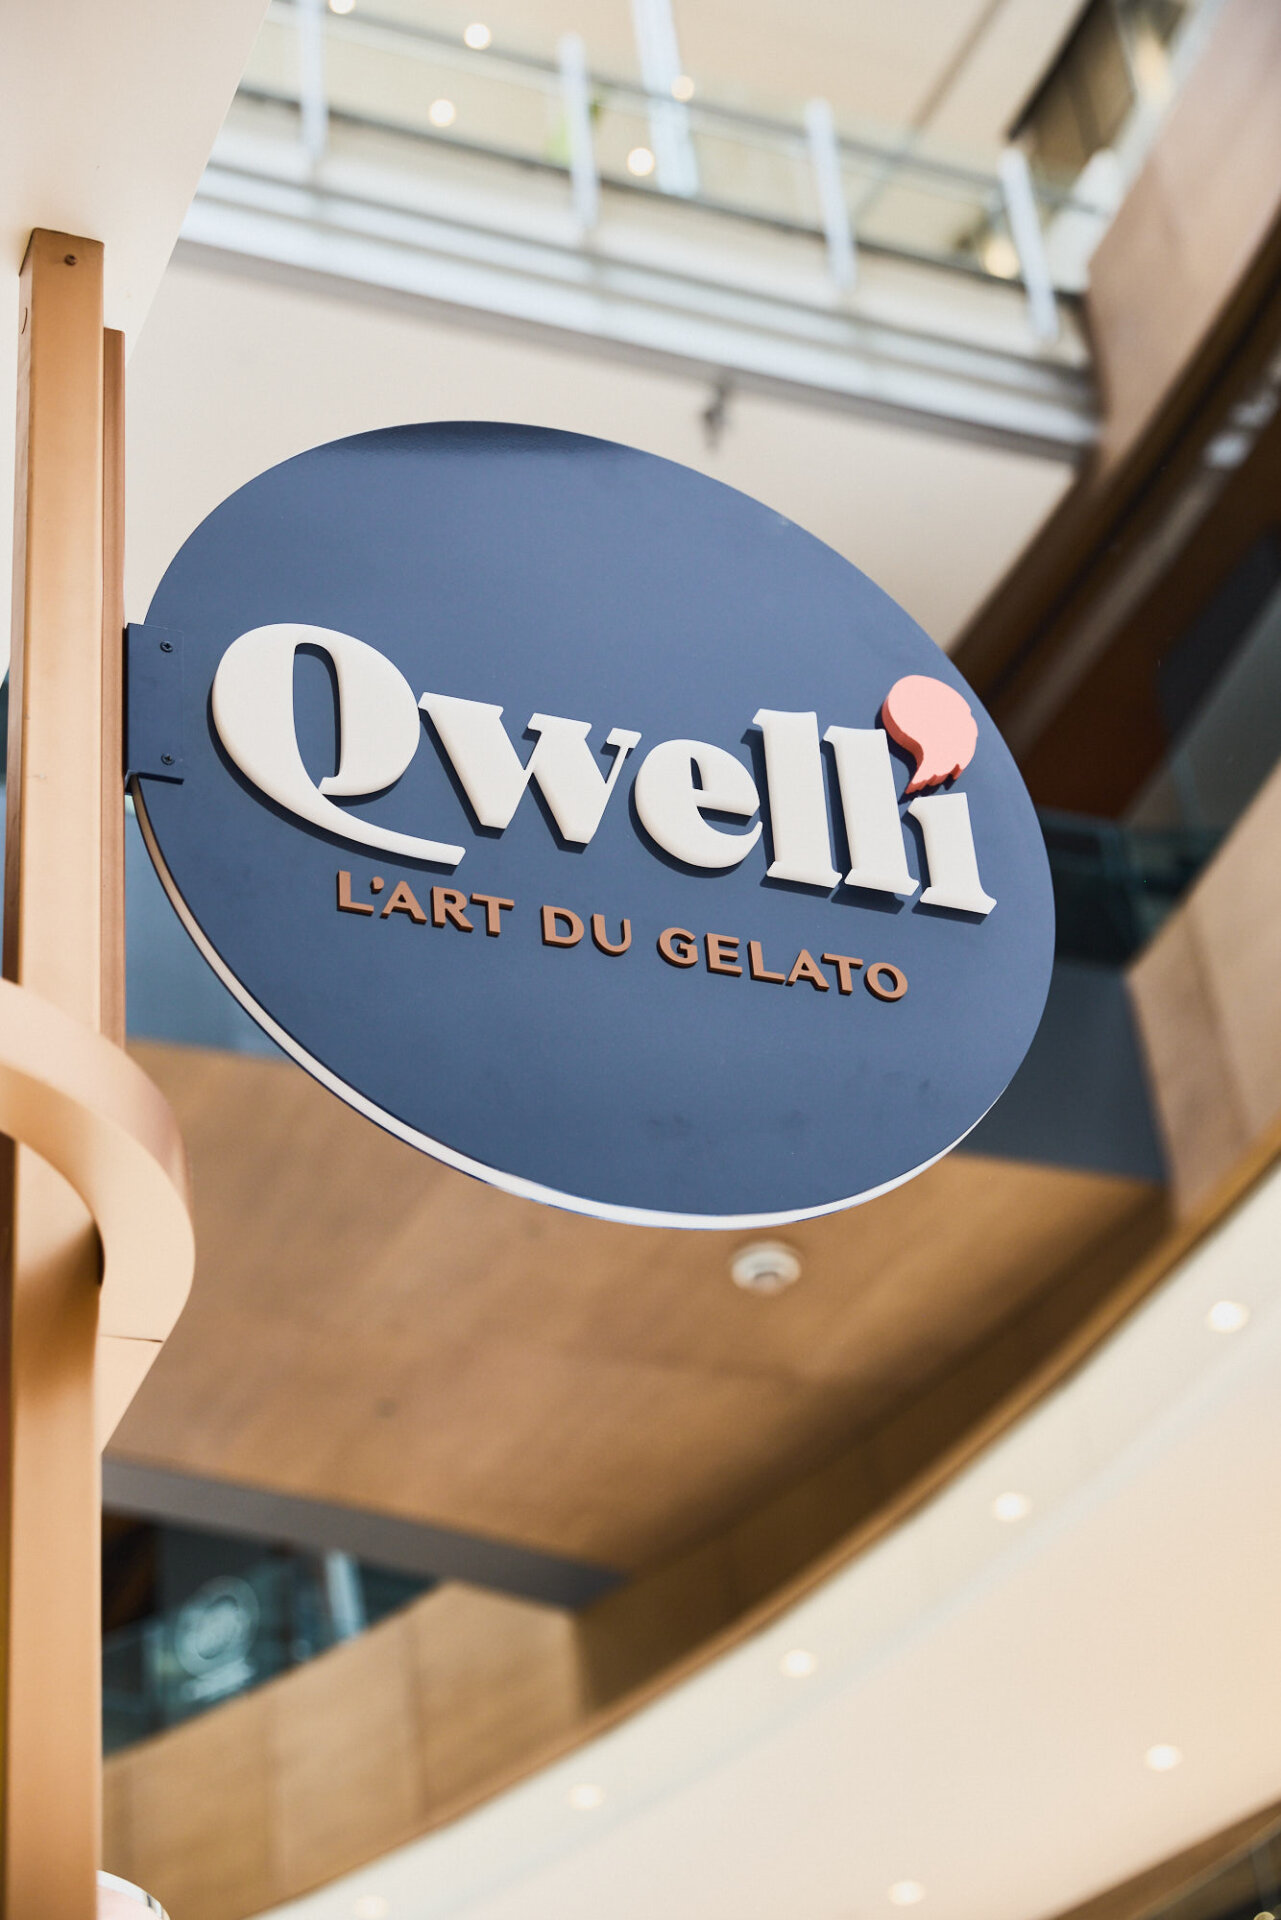 QWELLI, L’ART DU GELATO receives GRANDS PRIX DU DESIGN award for Montreal Eaton Centre.